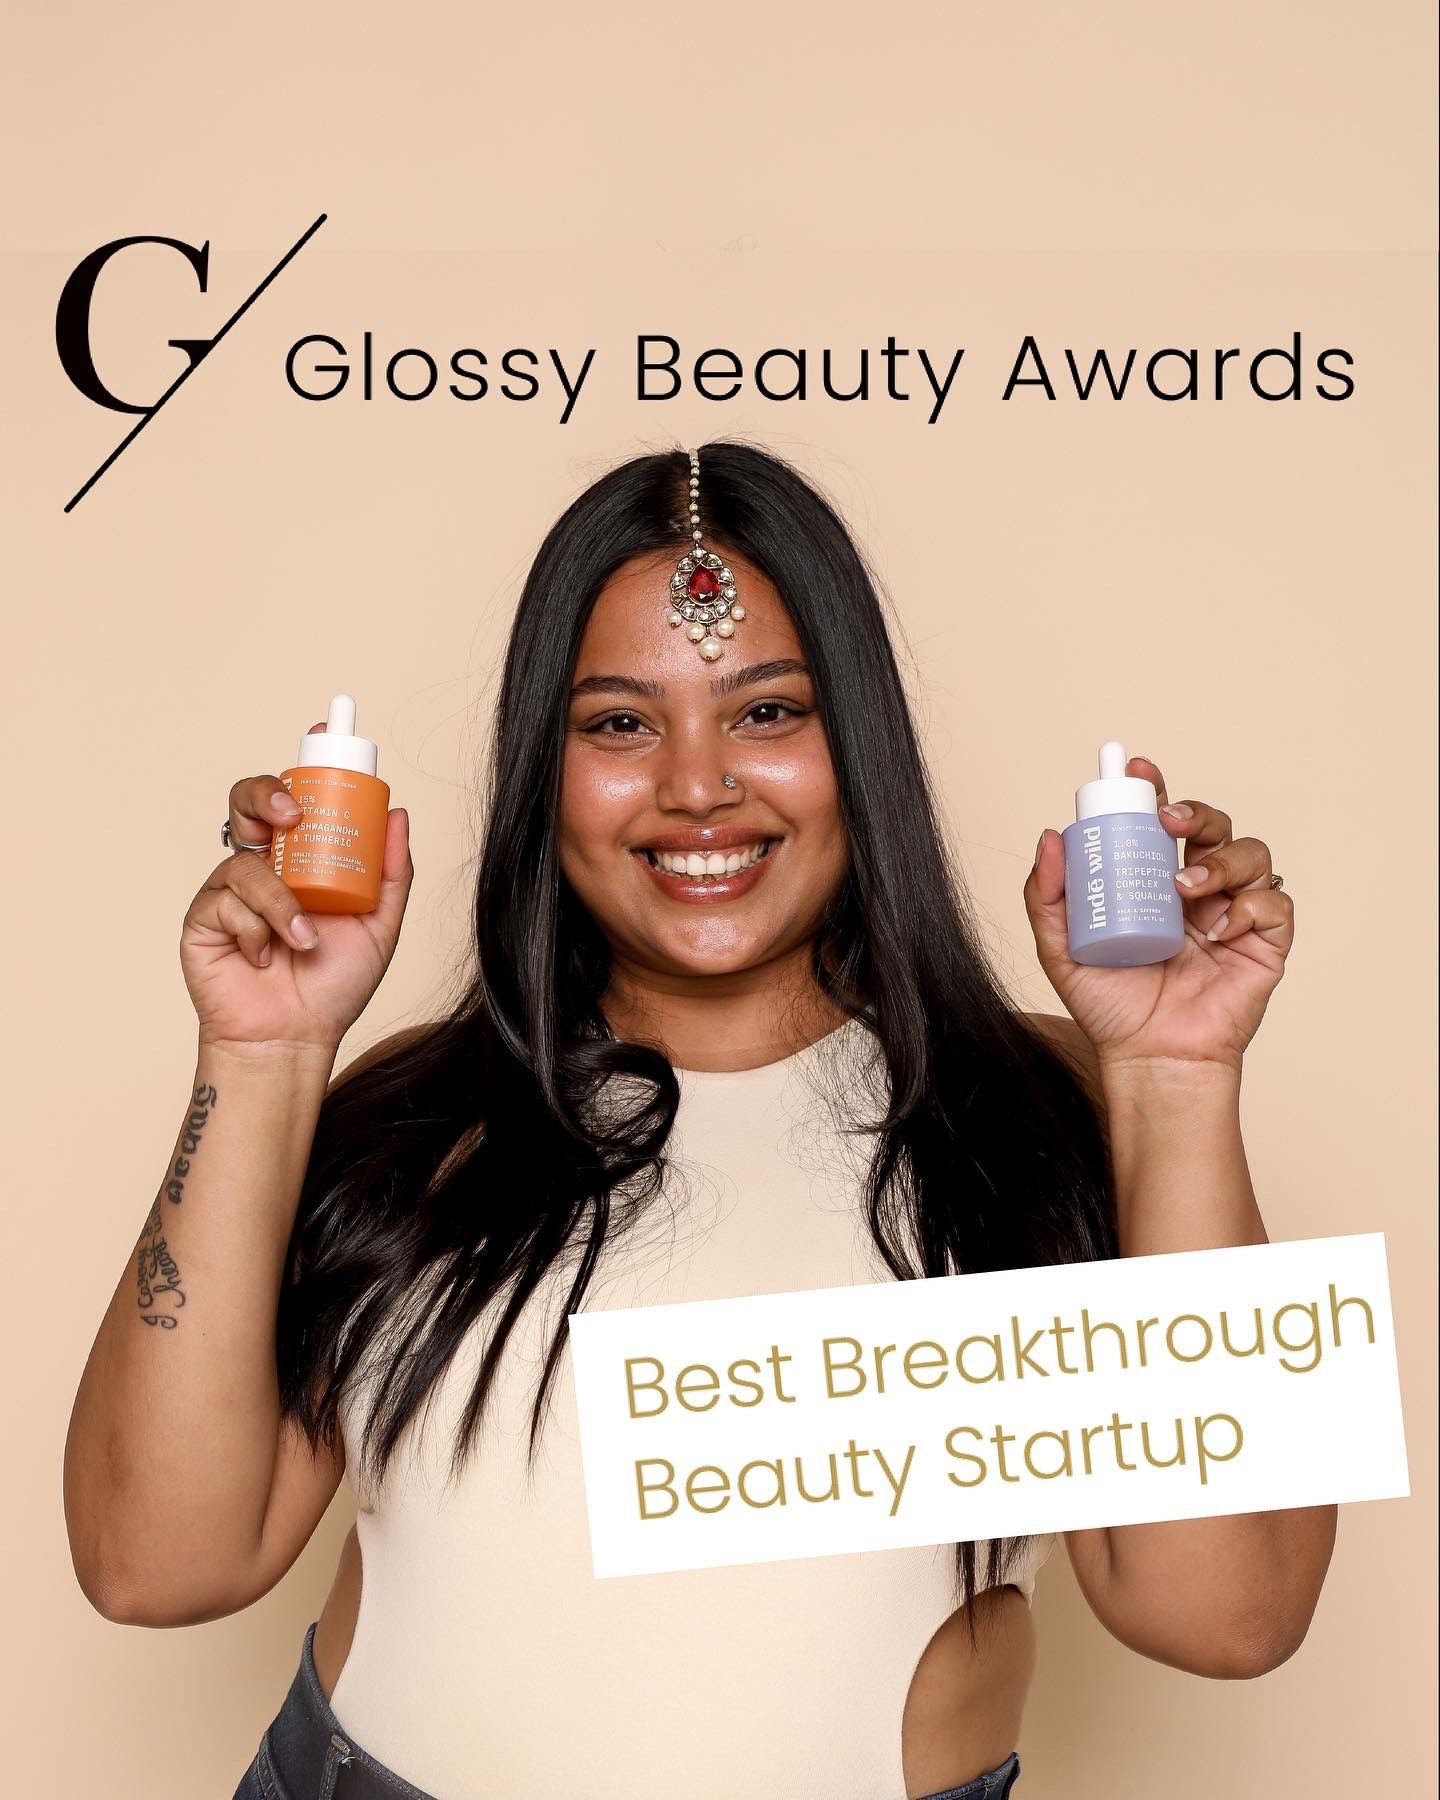 Best Breakthrough Beauty Startup Award by Glossy Magazine